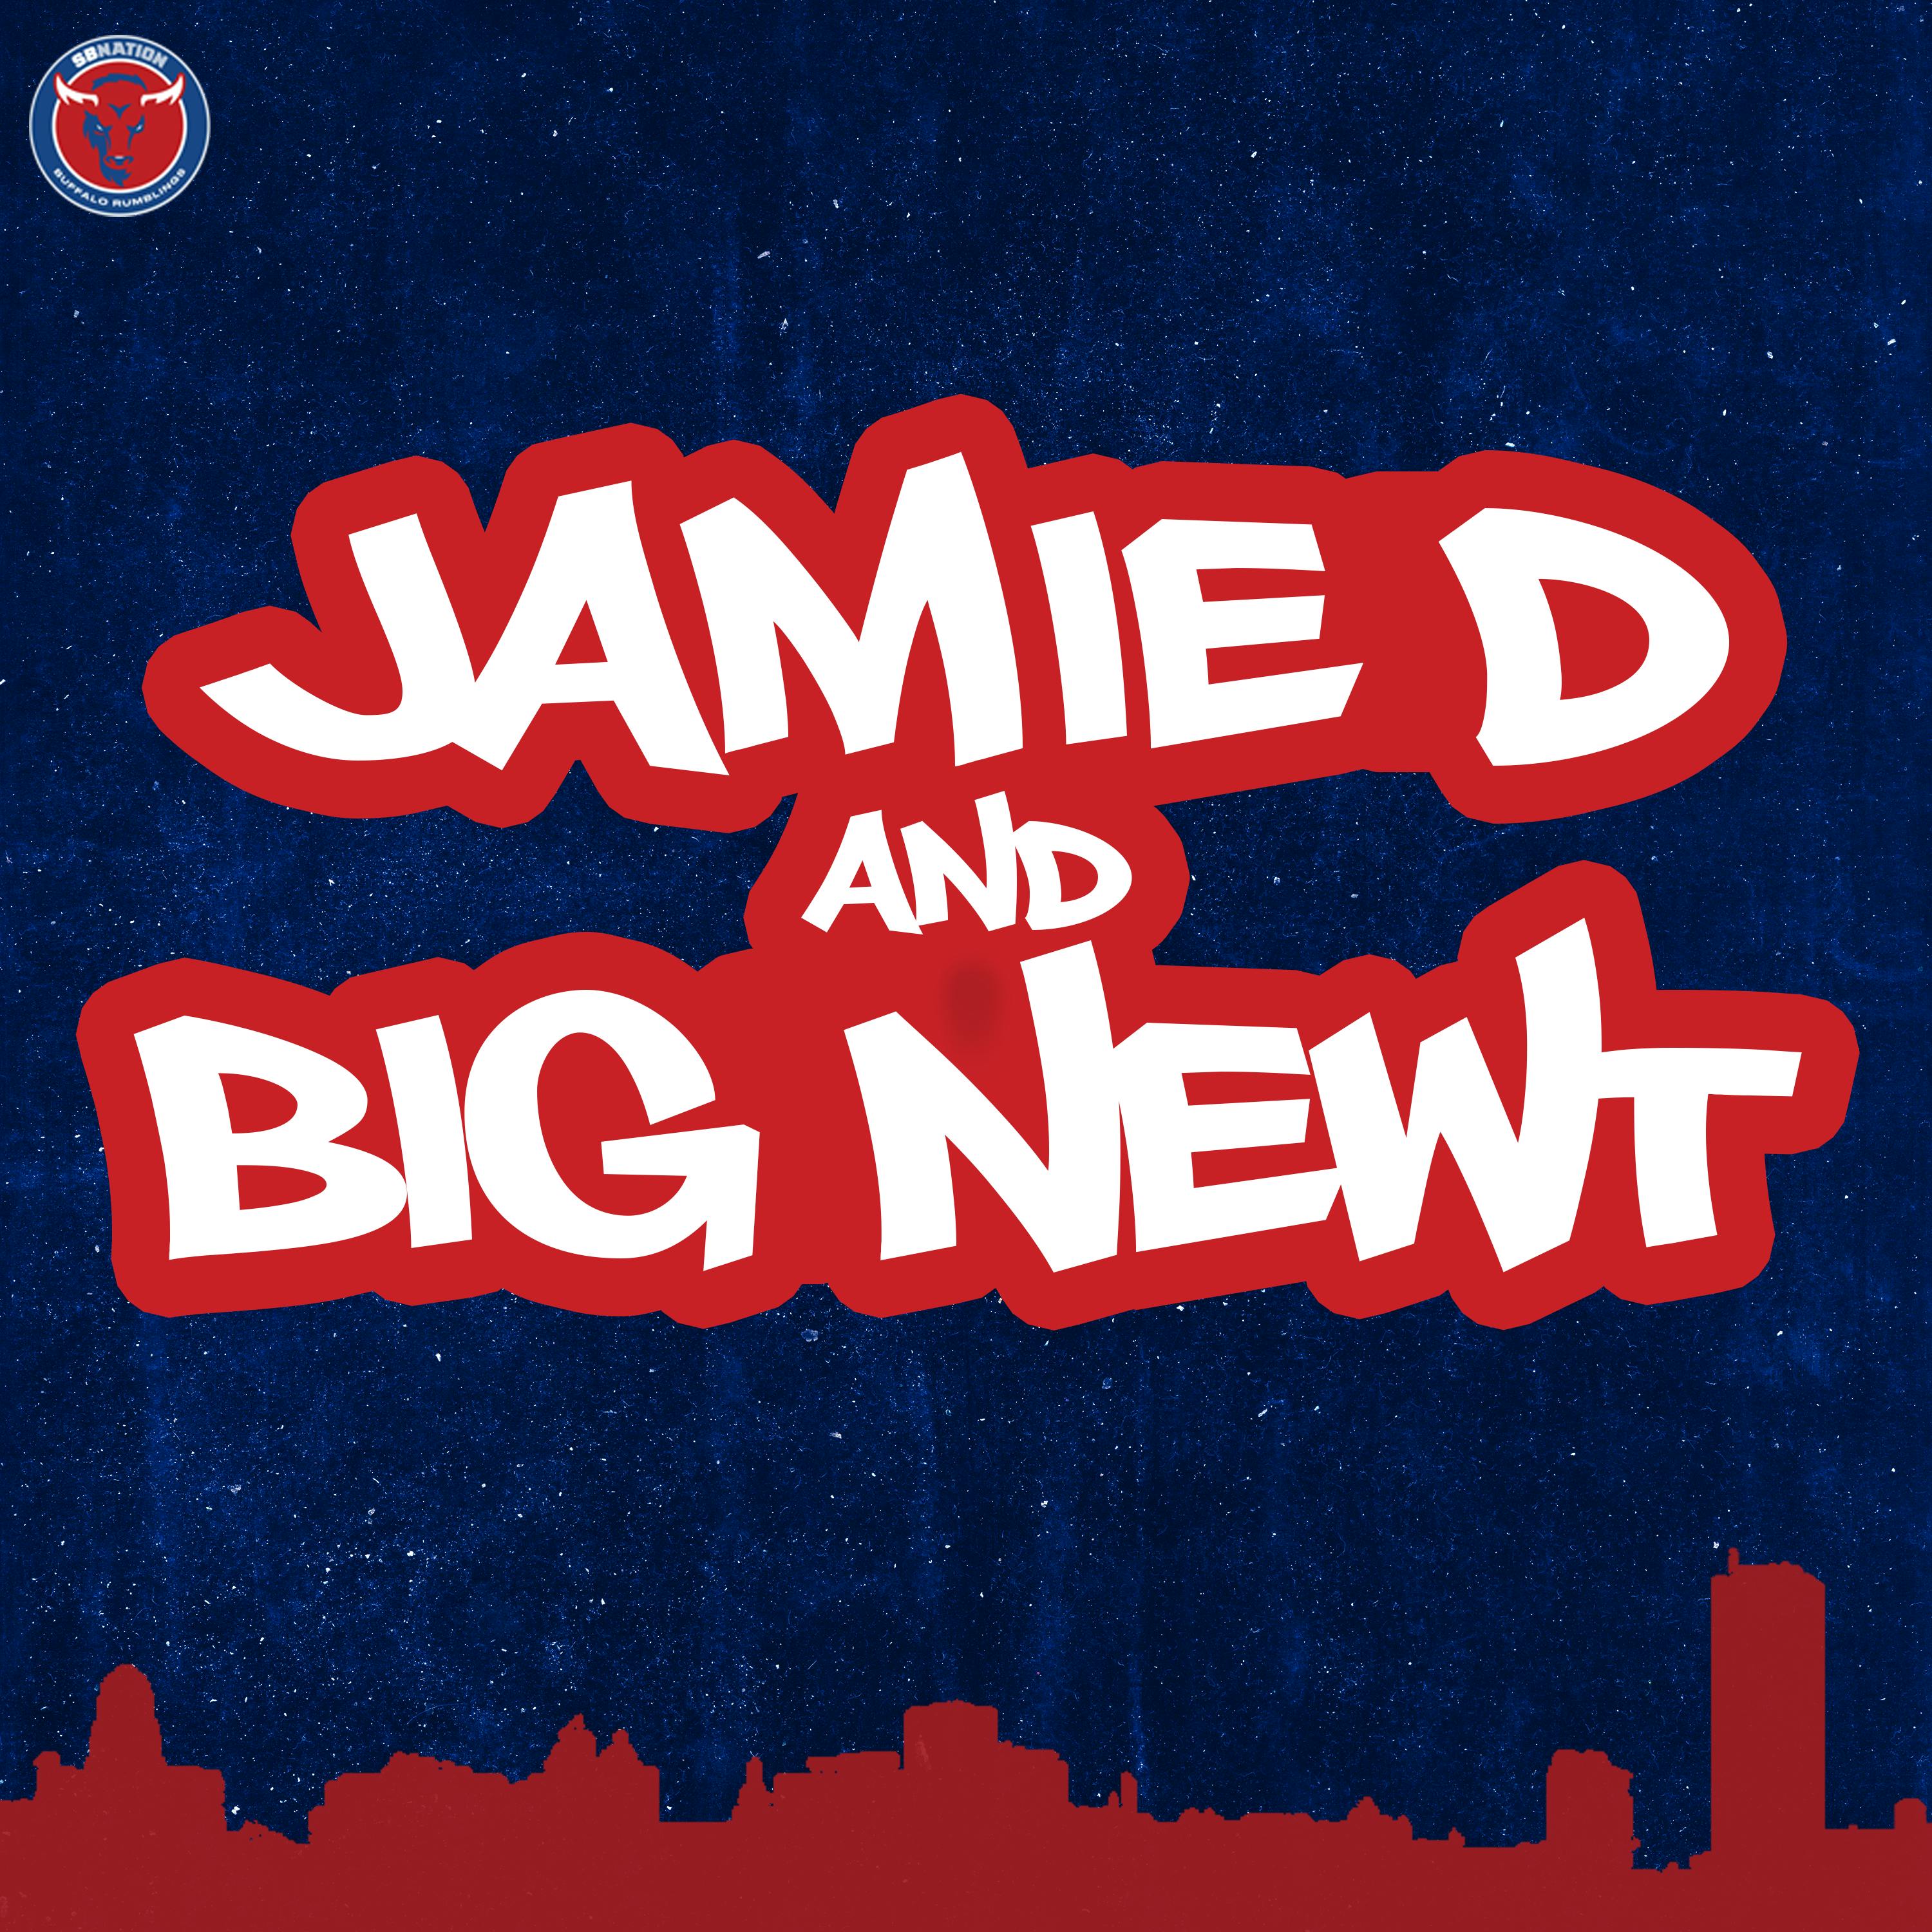 Jamie D & Big Newt: A wild ride